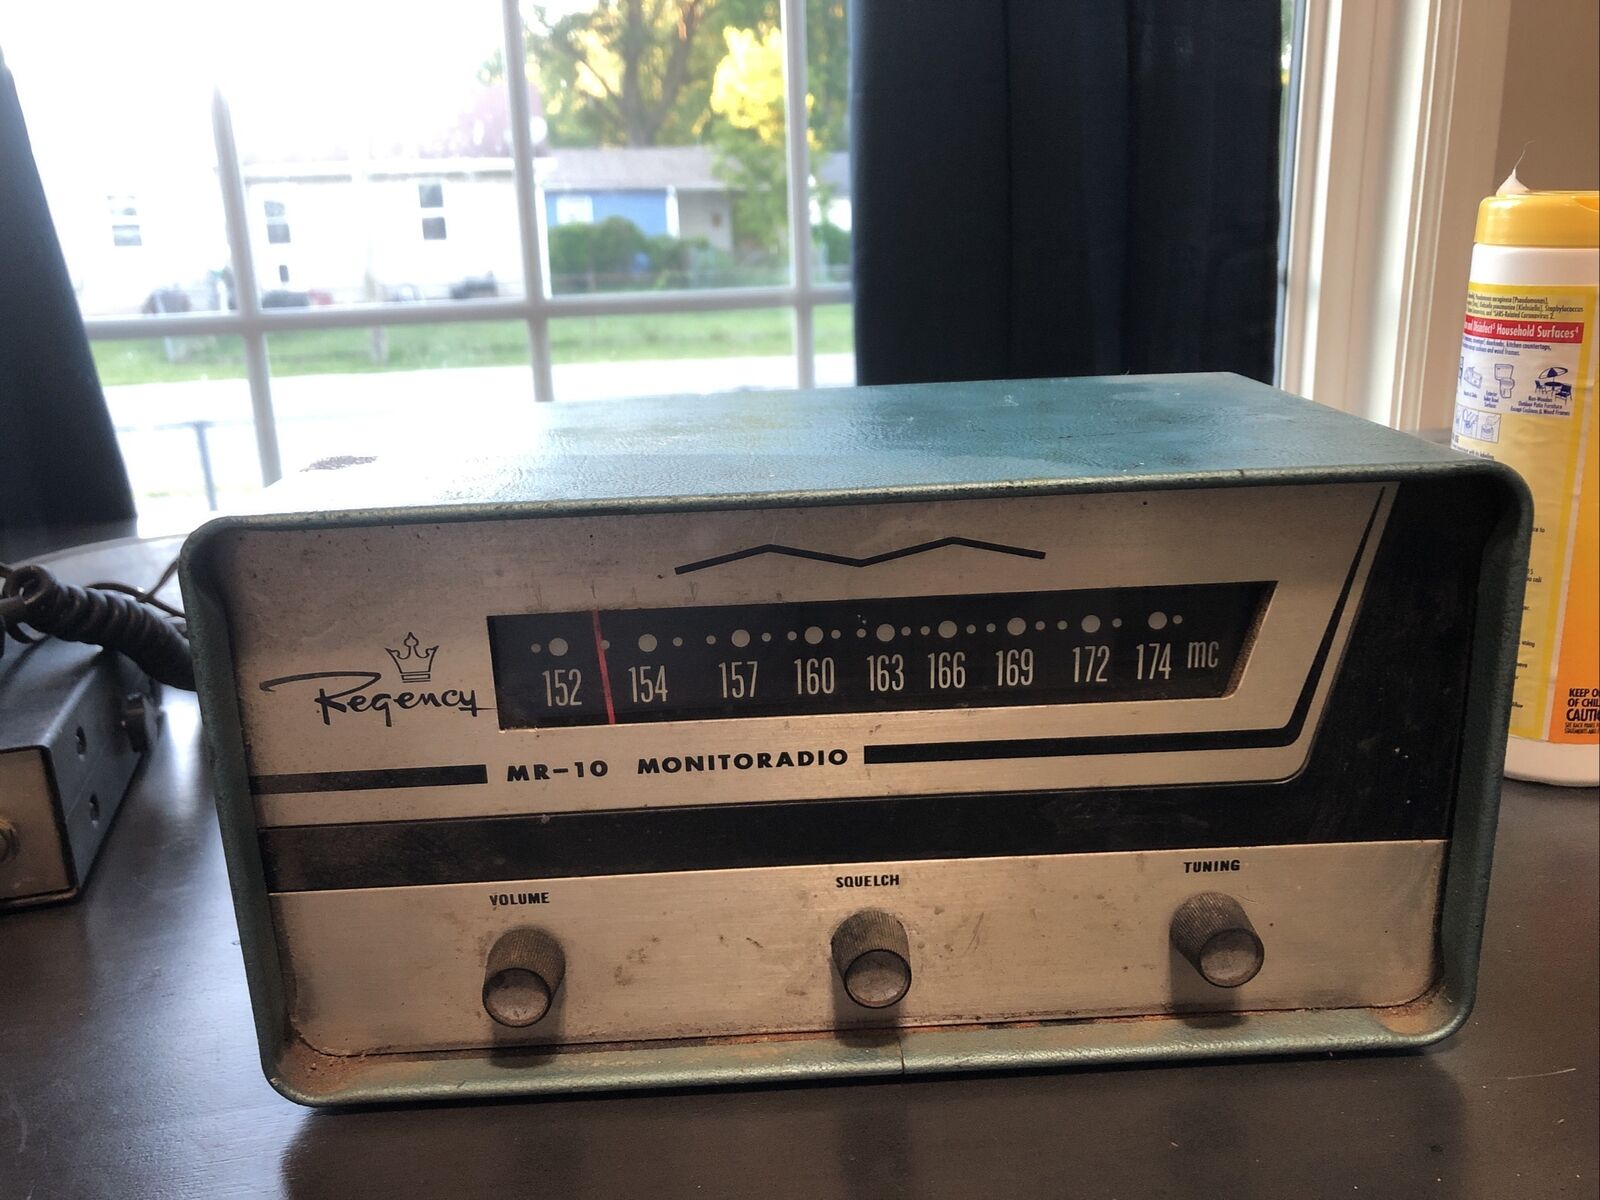 Vintage Regency MR-10 Monitoradio  Tube Radio Receiver in Aqua Blue Untested